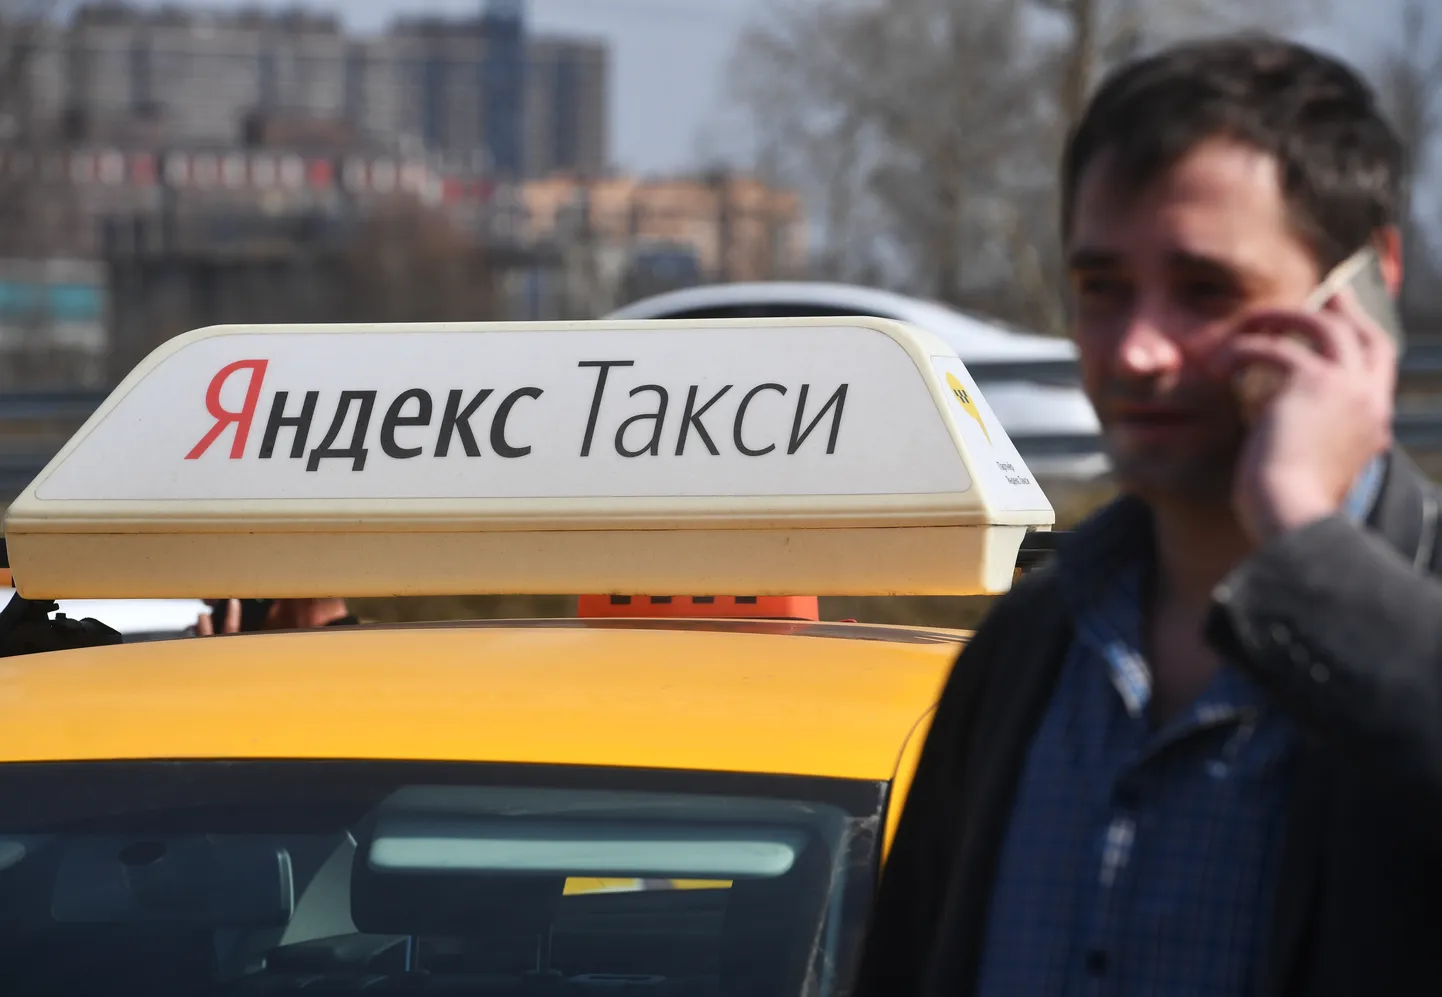 Yandex.Taxi. Иллюстративное фото.